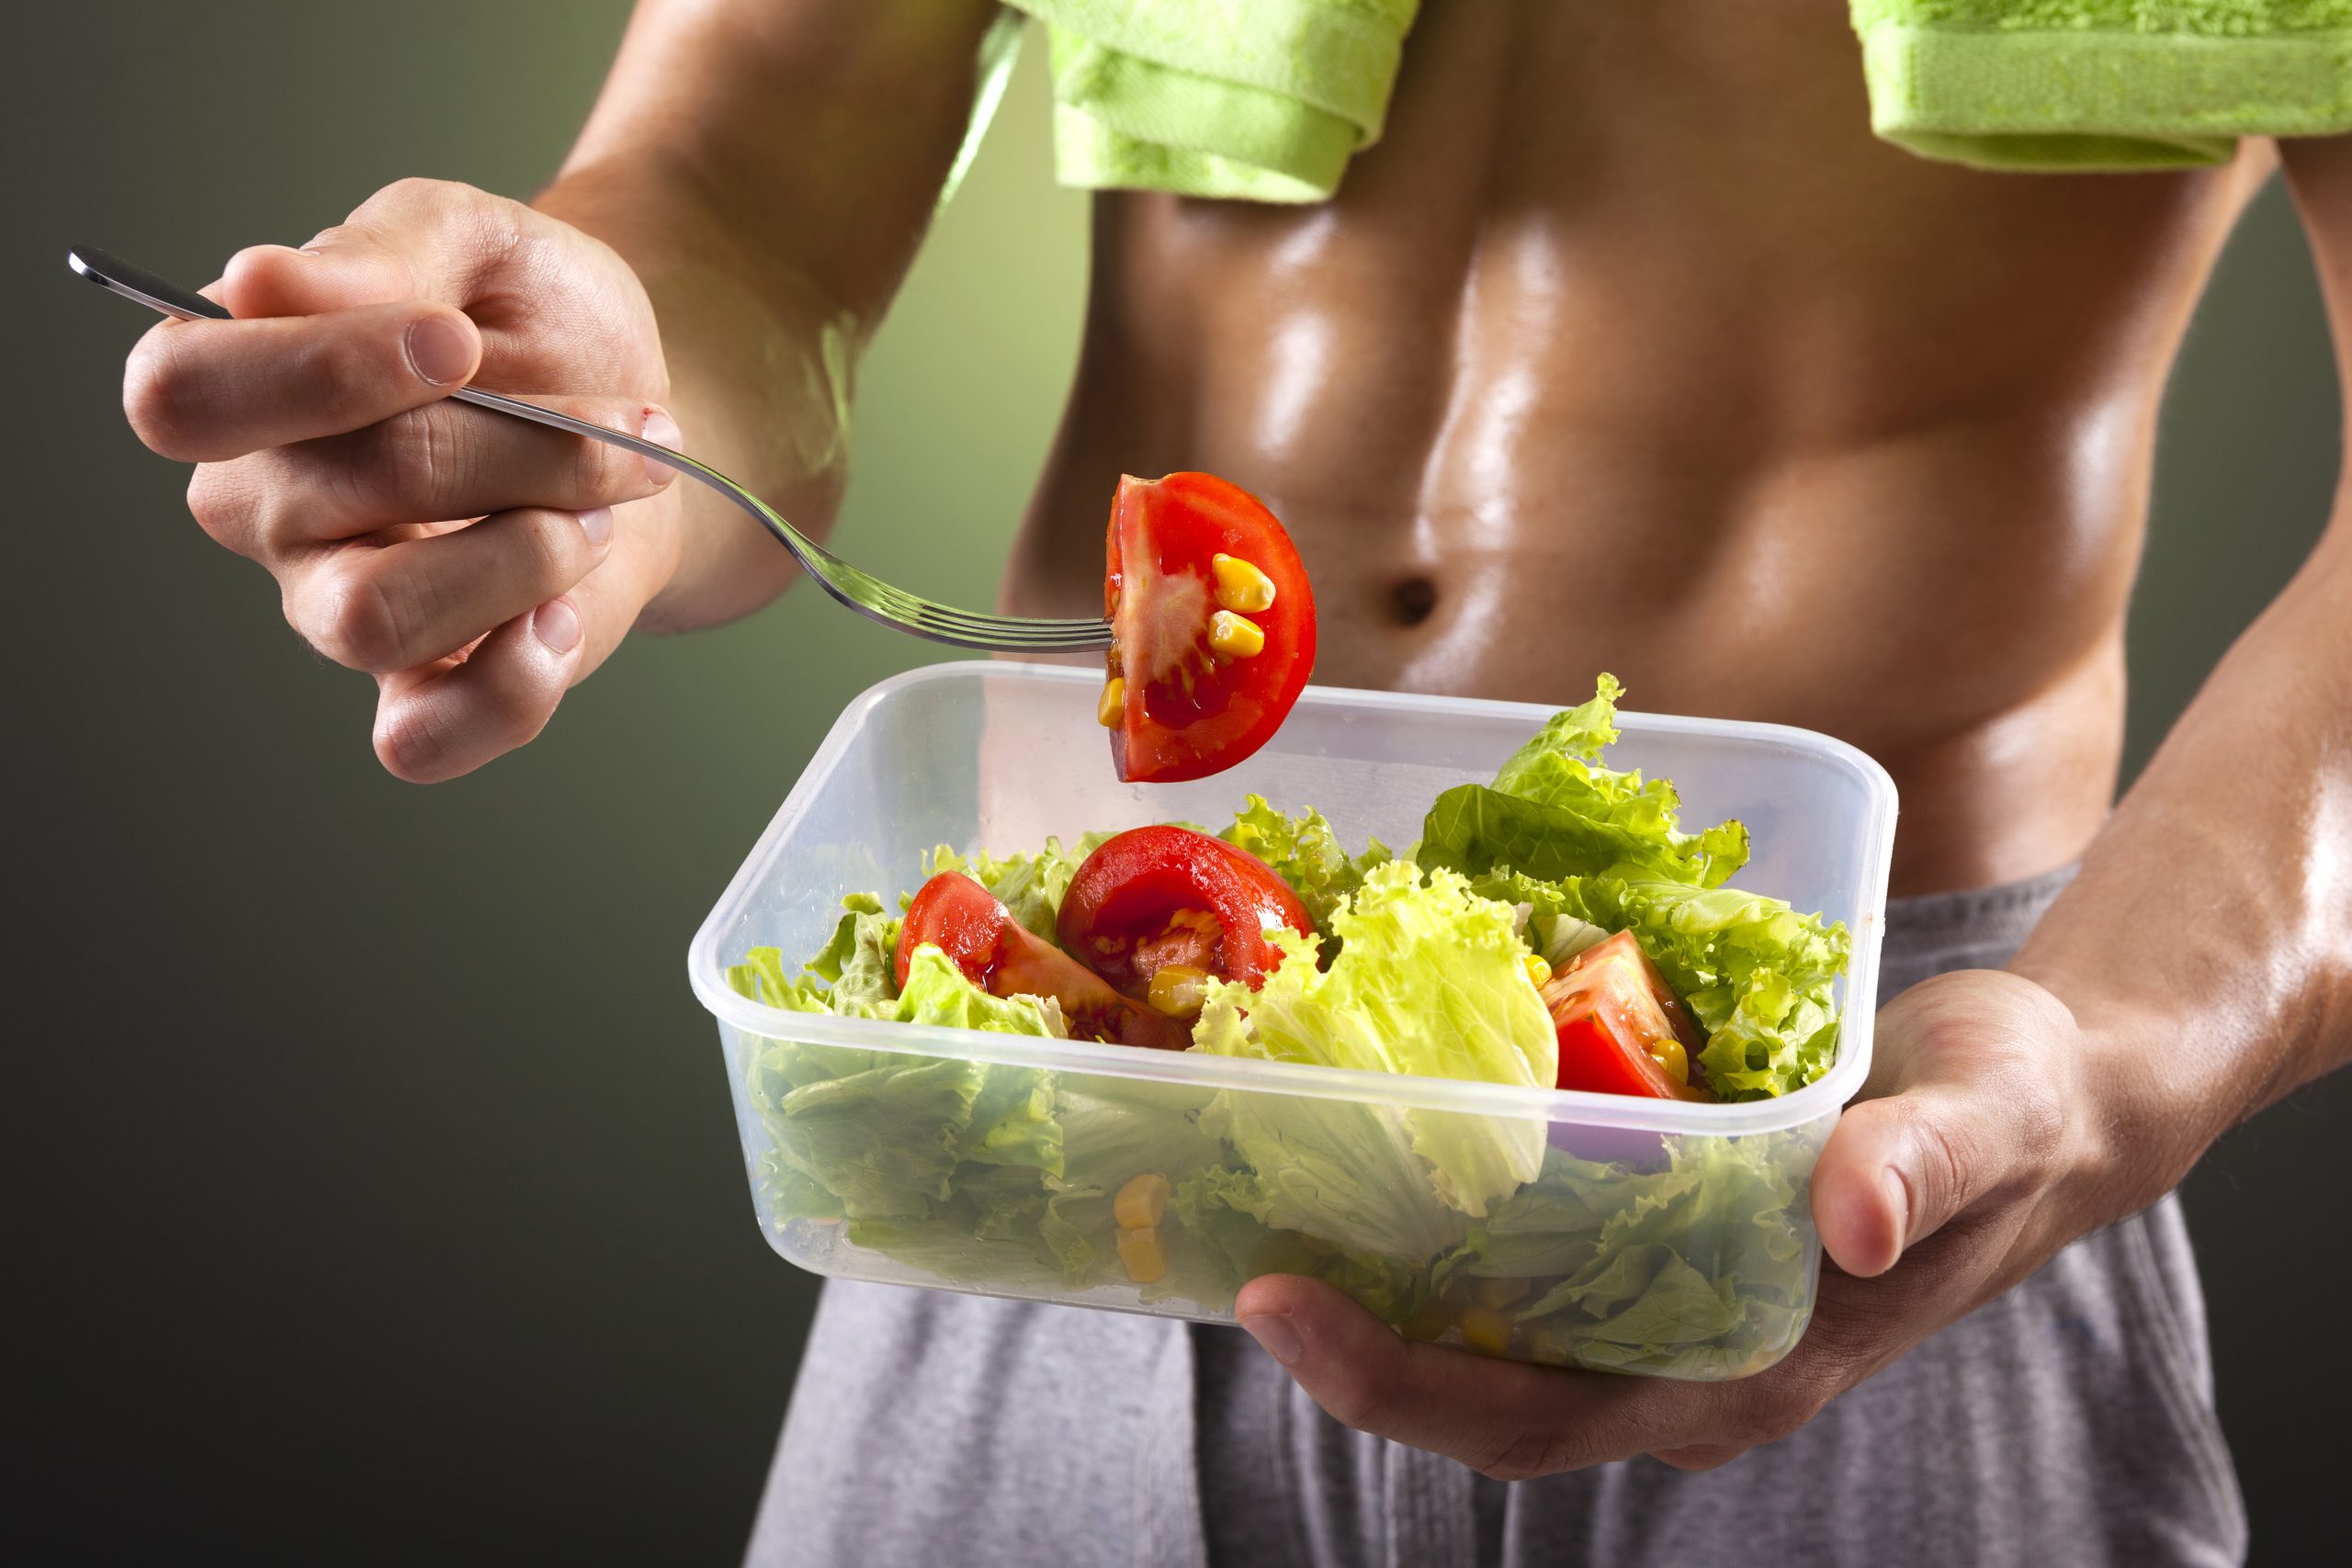 Dieta calorica para ganar masa muscular